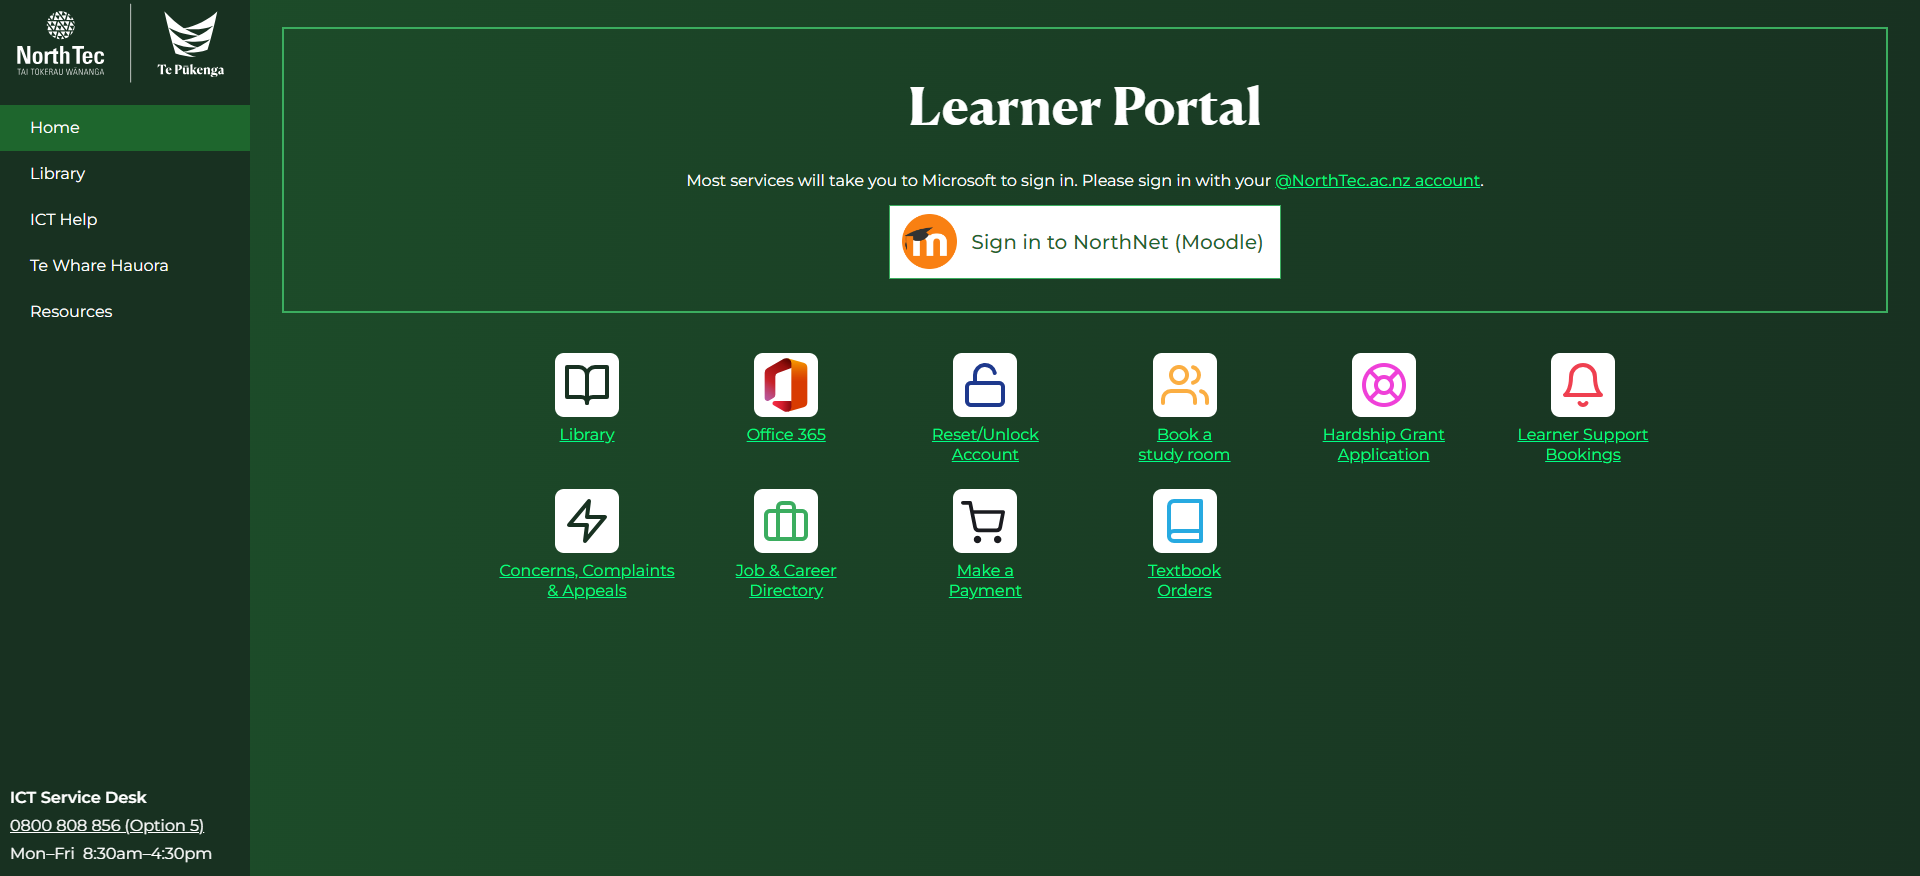 Learner Portal Homepage